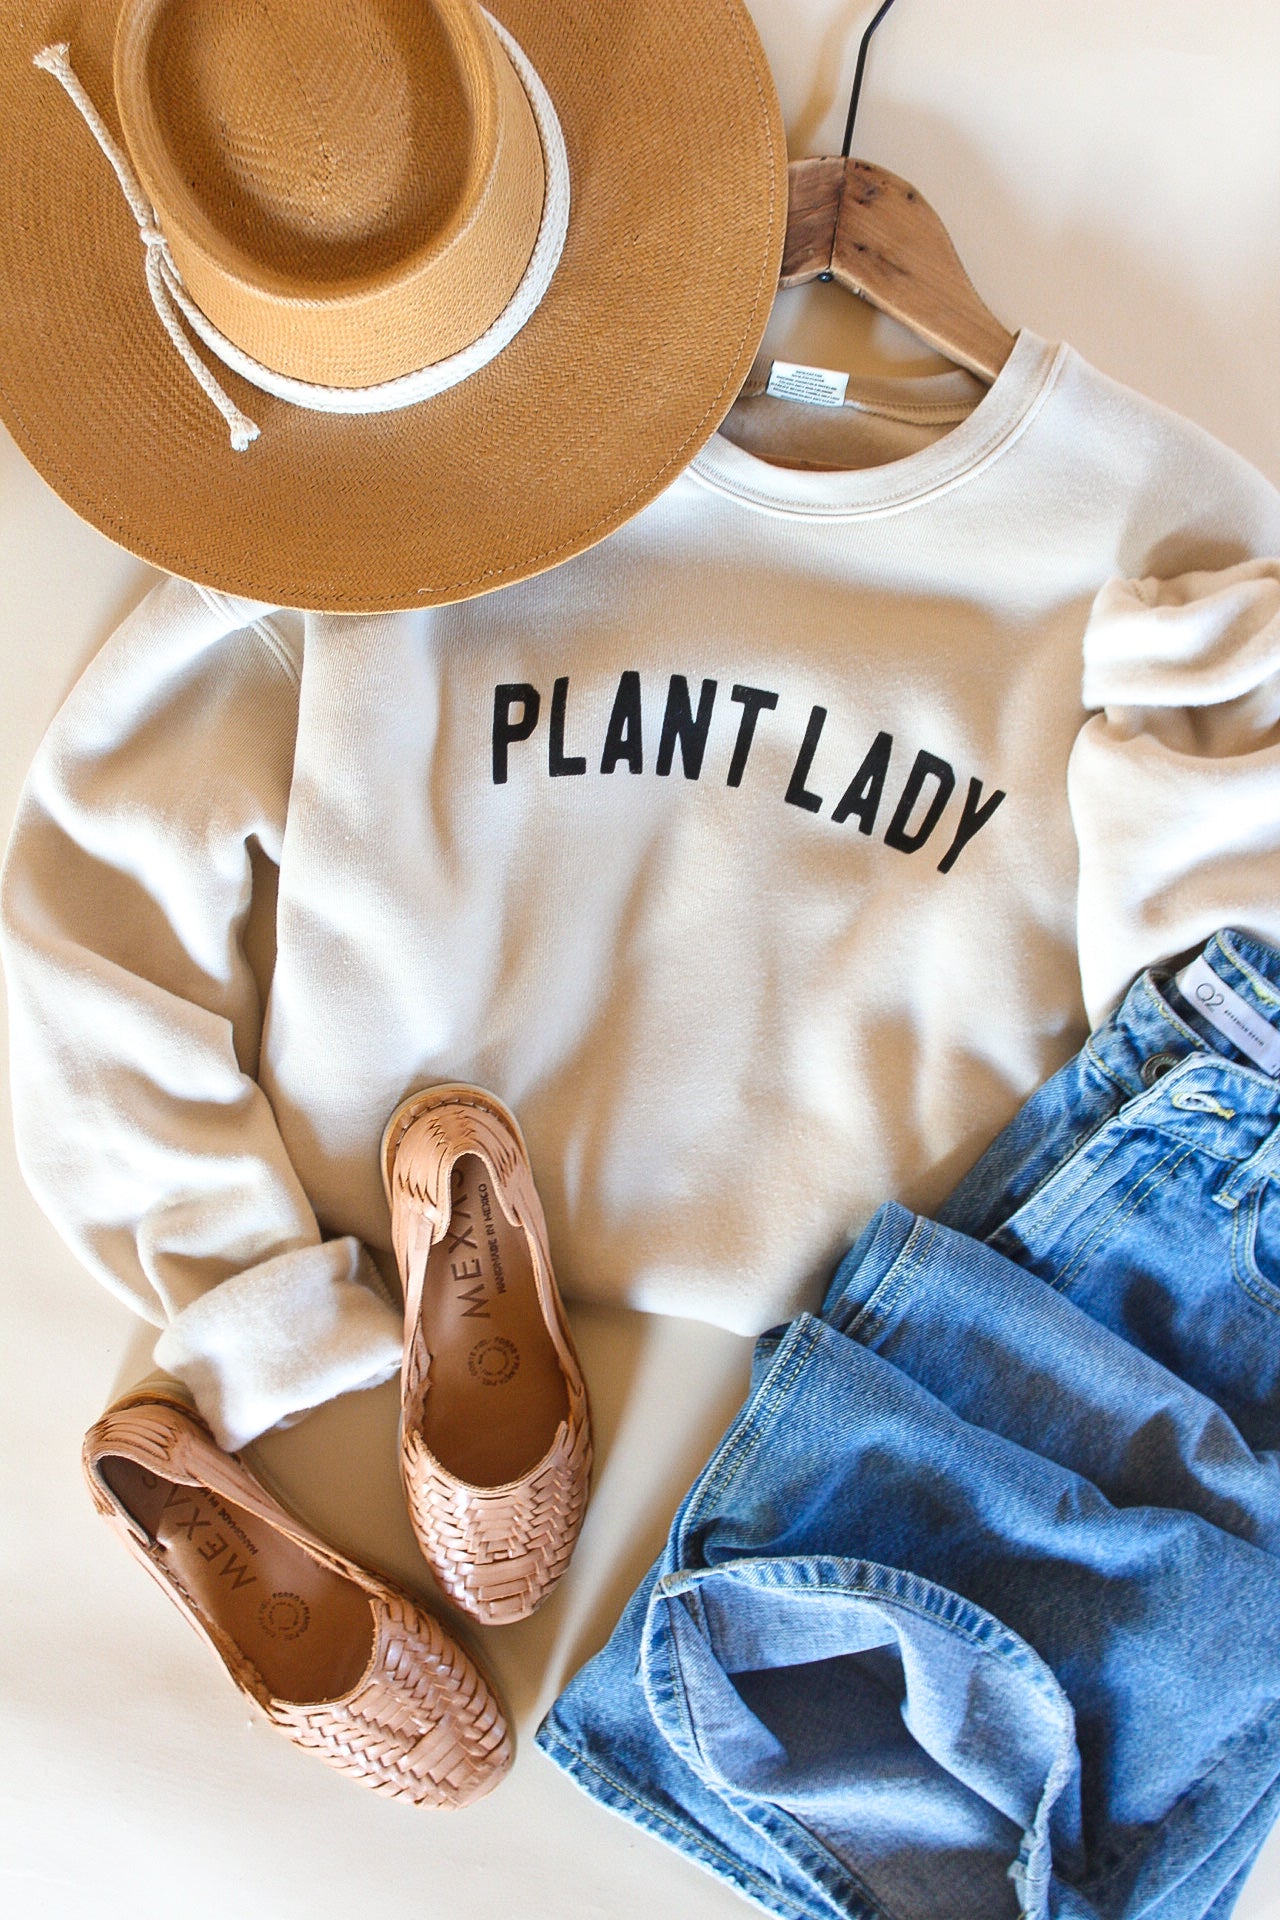 Plant Lady Graphic Sweatshirt